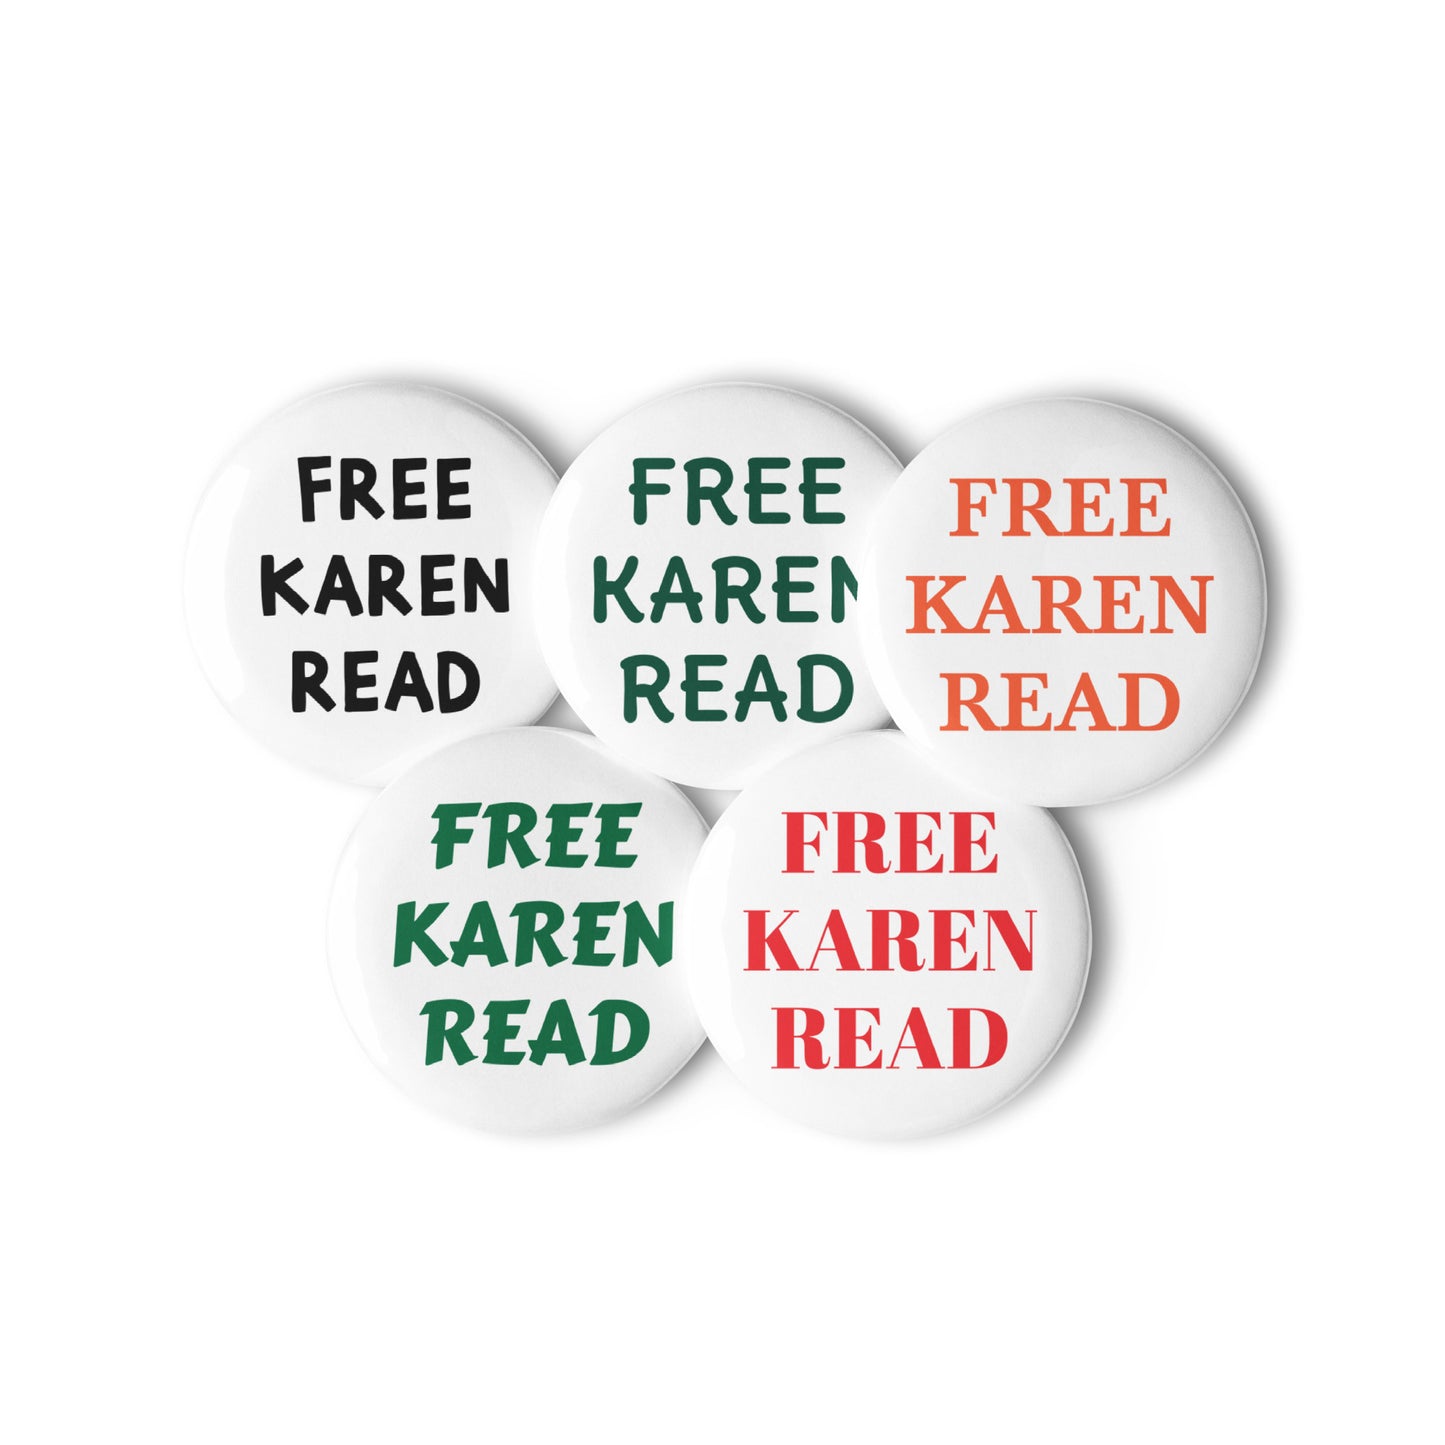 Free Karen Read set of pin buttons